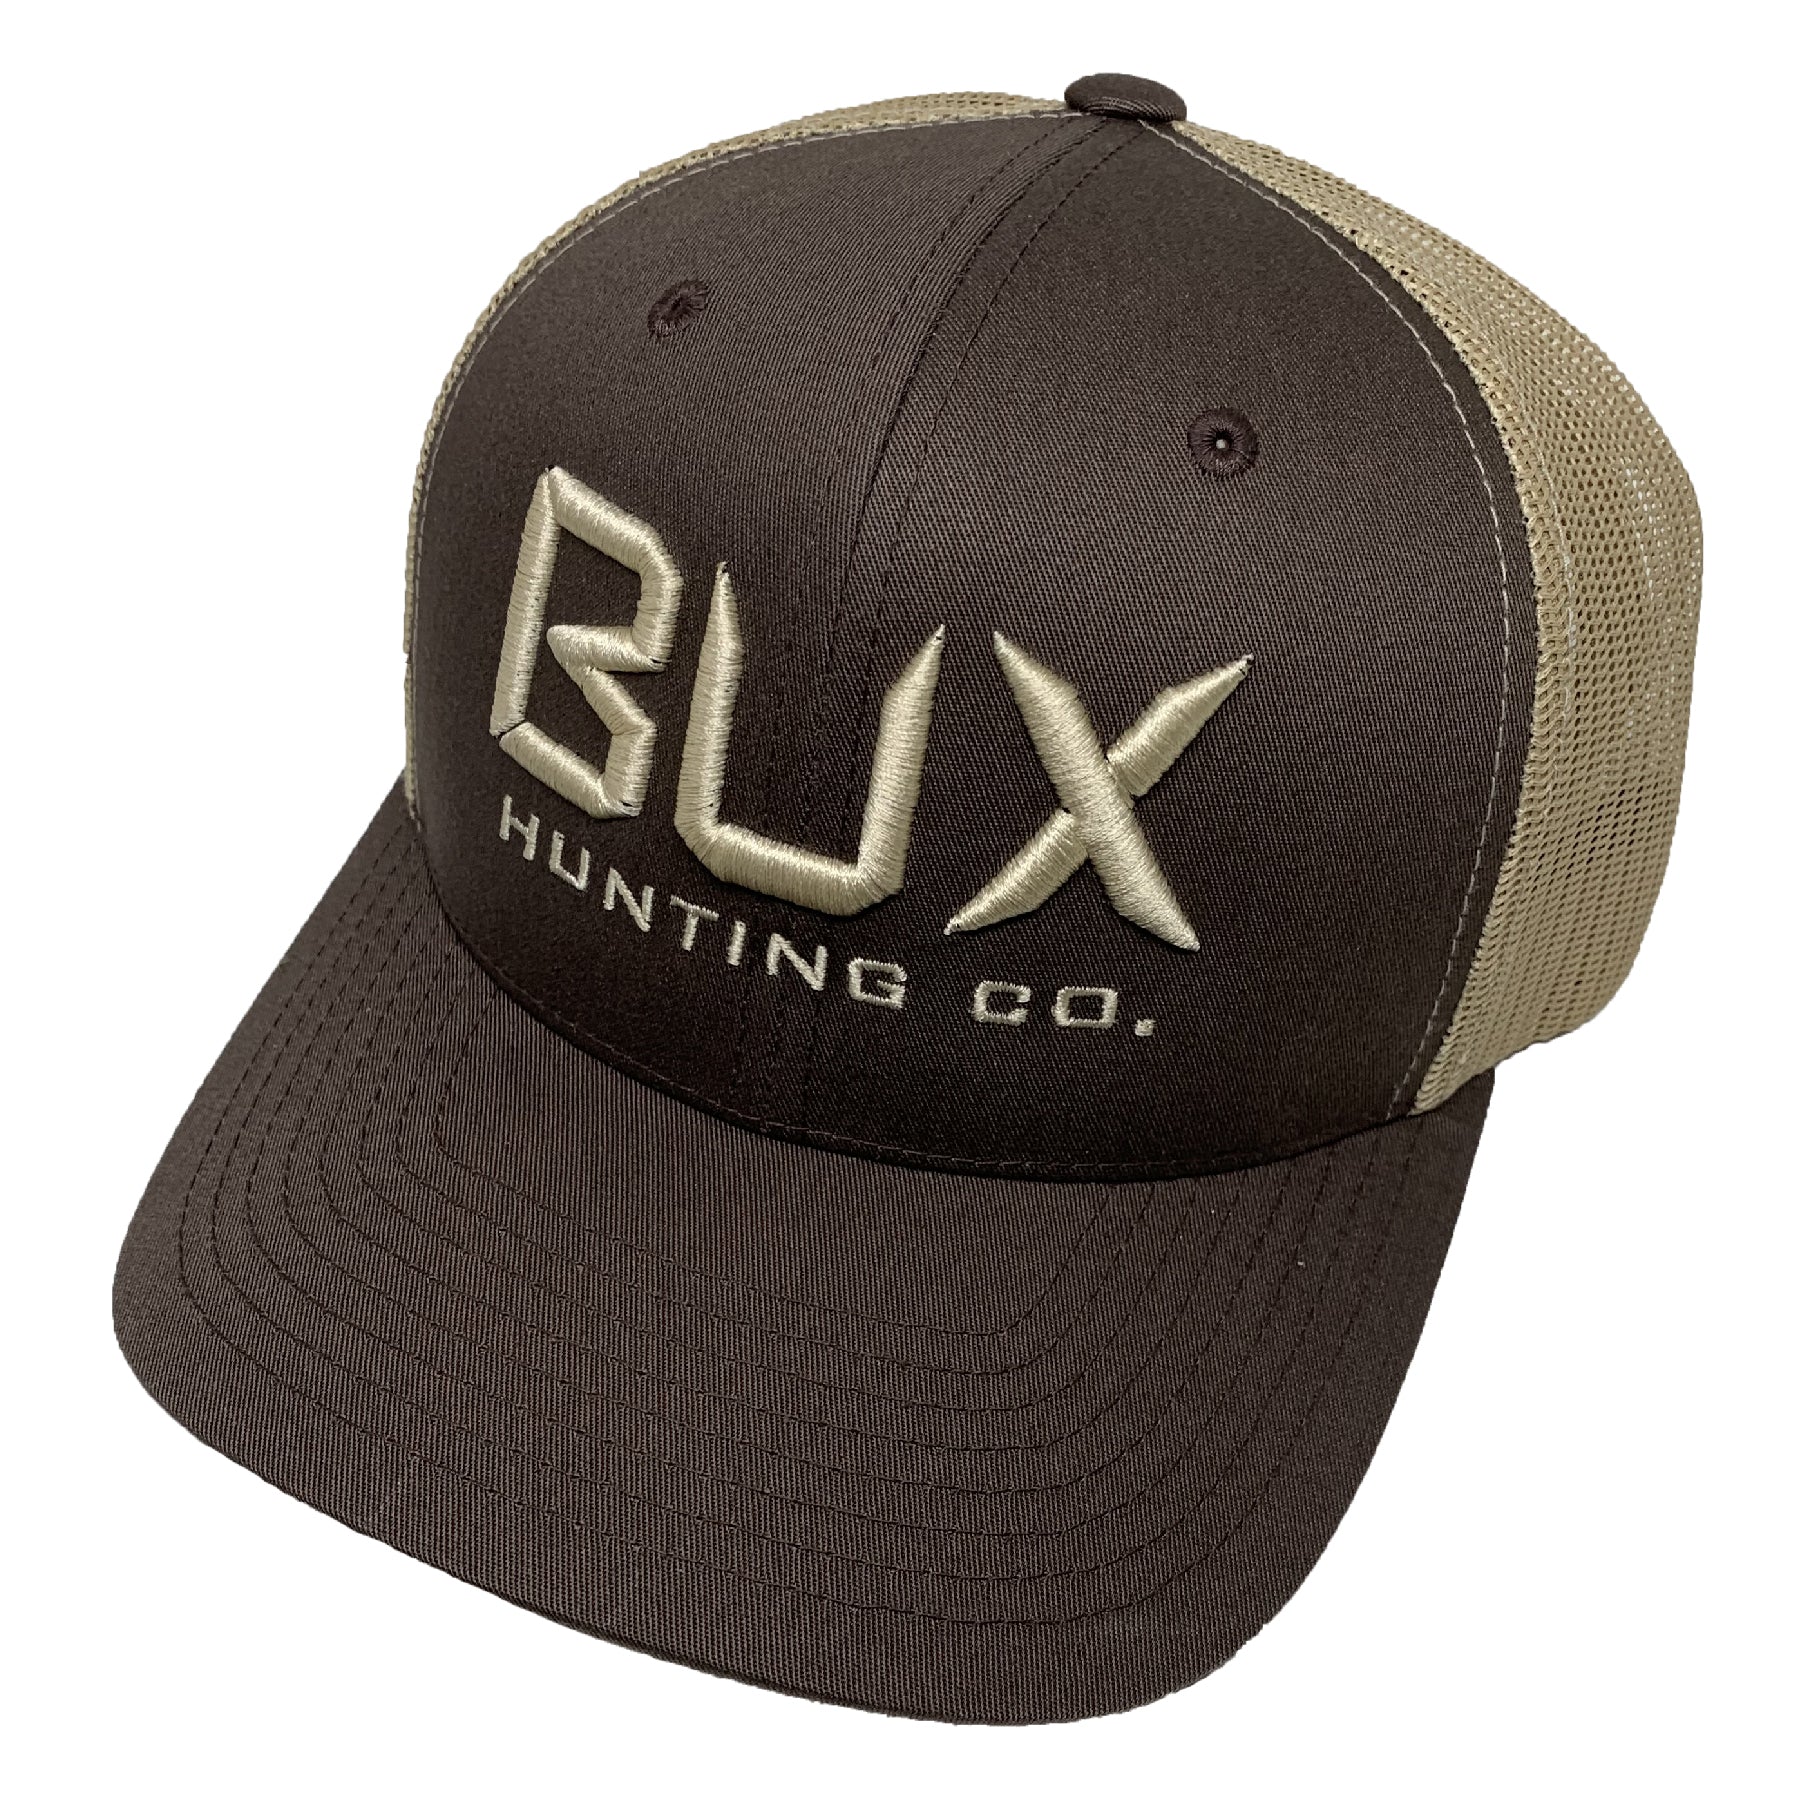 APPAREL – Bux Hunting